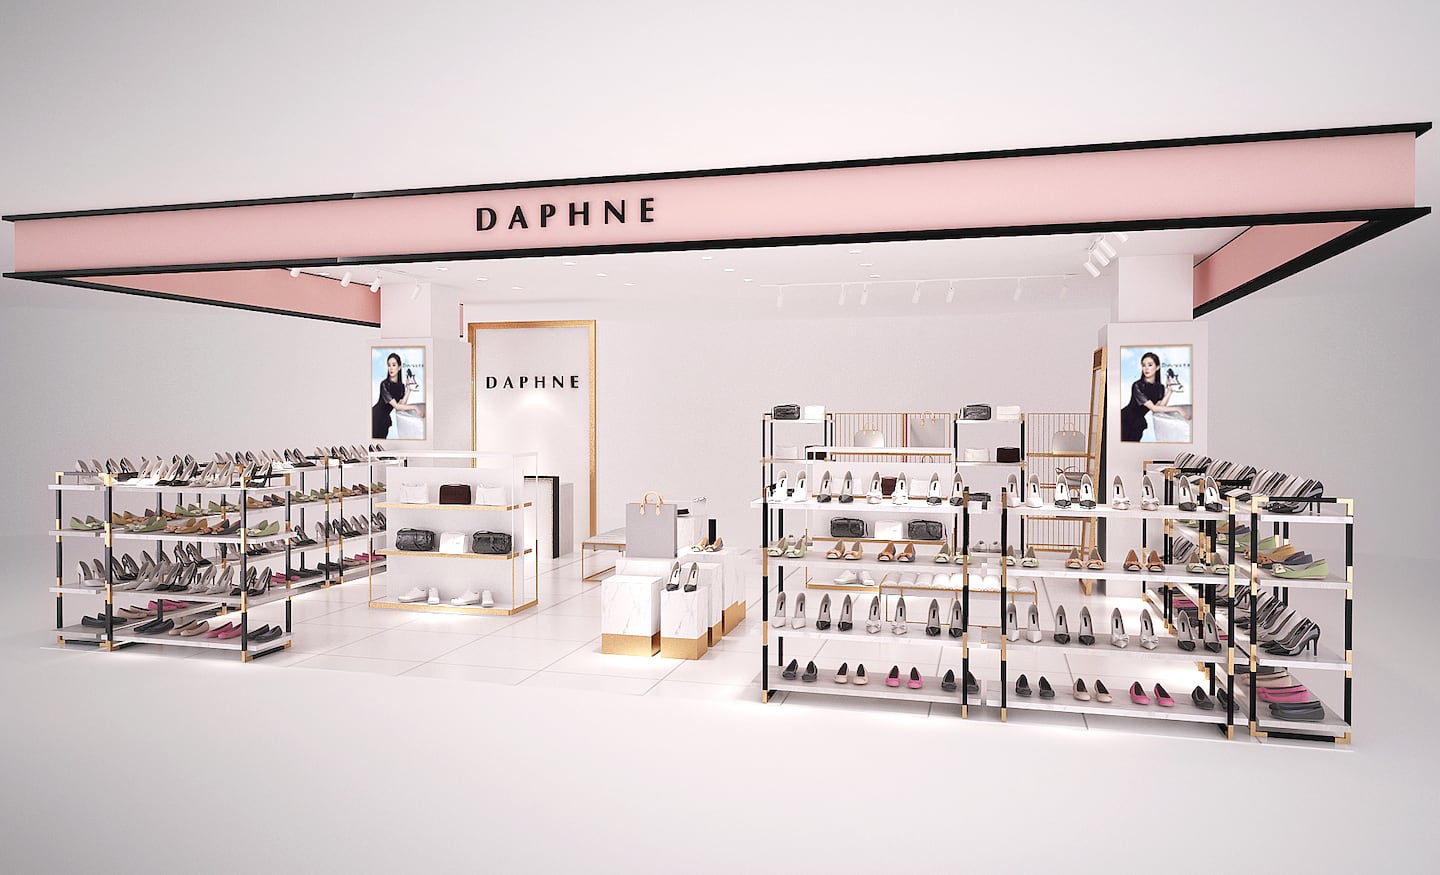 A Daphne storefront. Daphne International